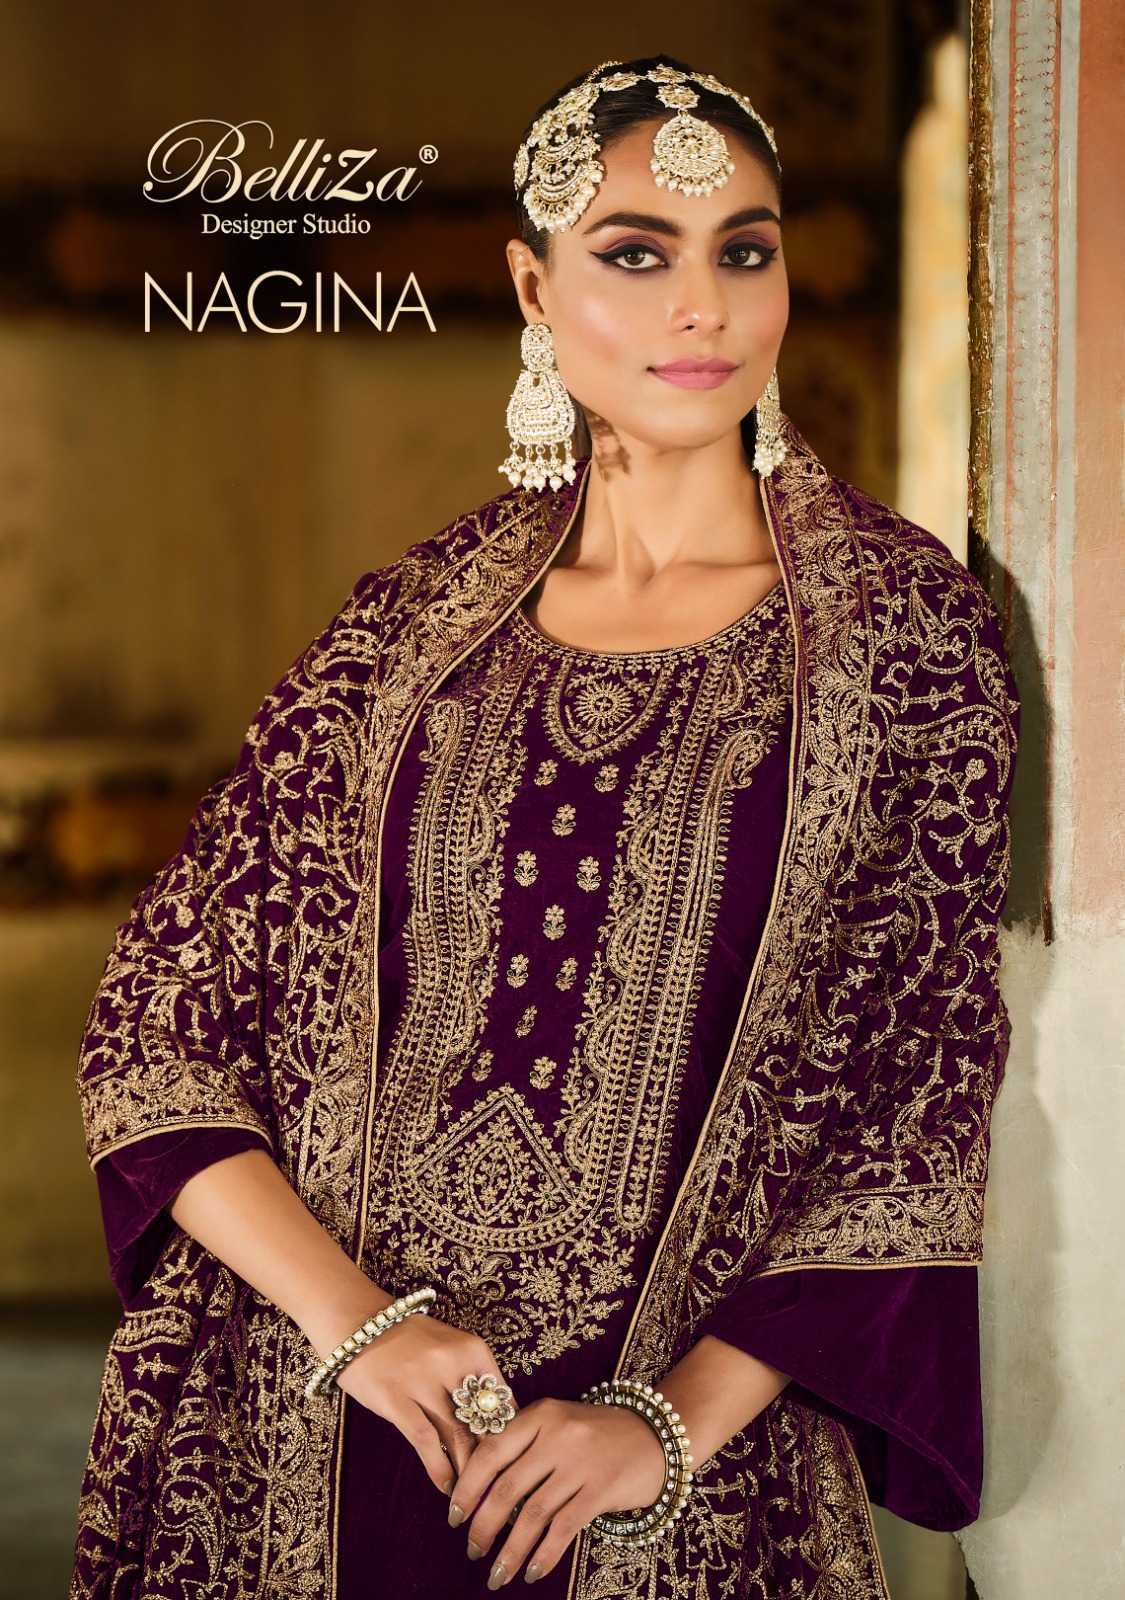 belliza designer nagina new collection of pakistani winter wear salwar kameez material for occasion